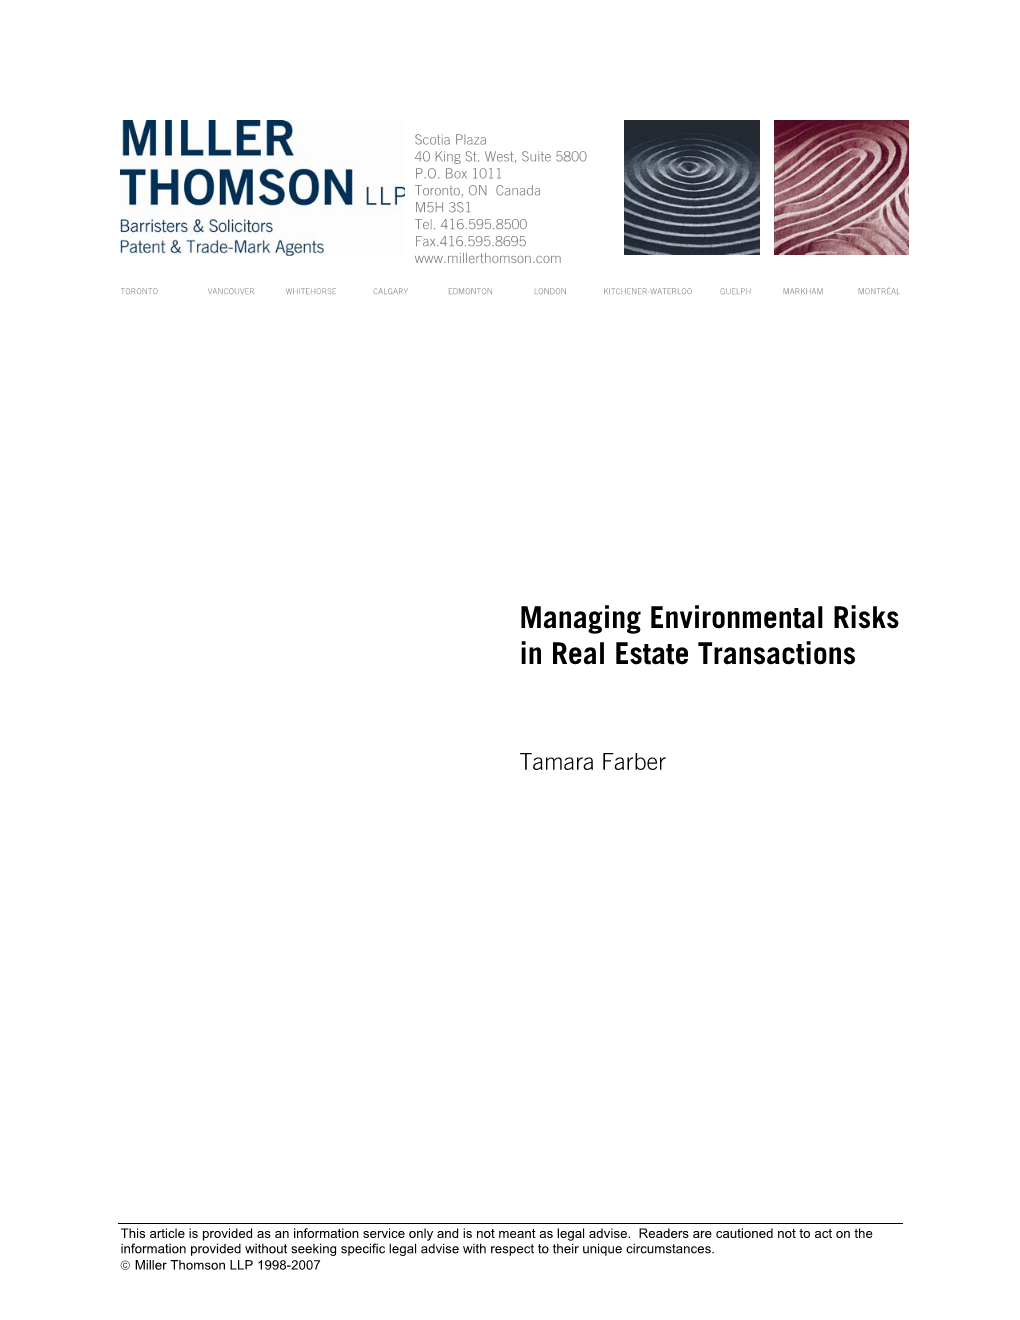 Managing Environmental Risks in Real Estate Transactions